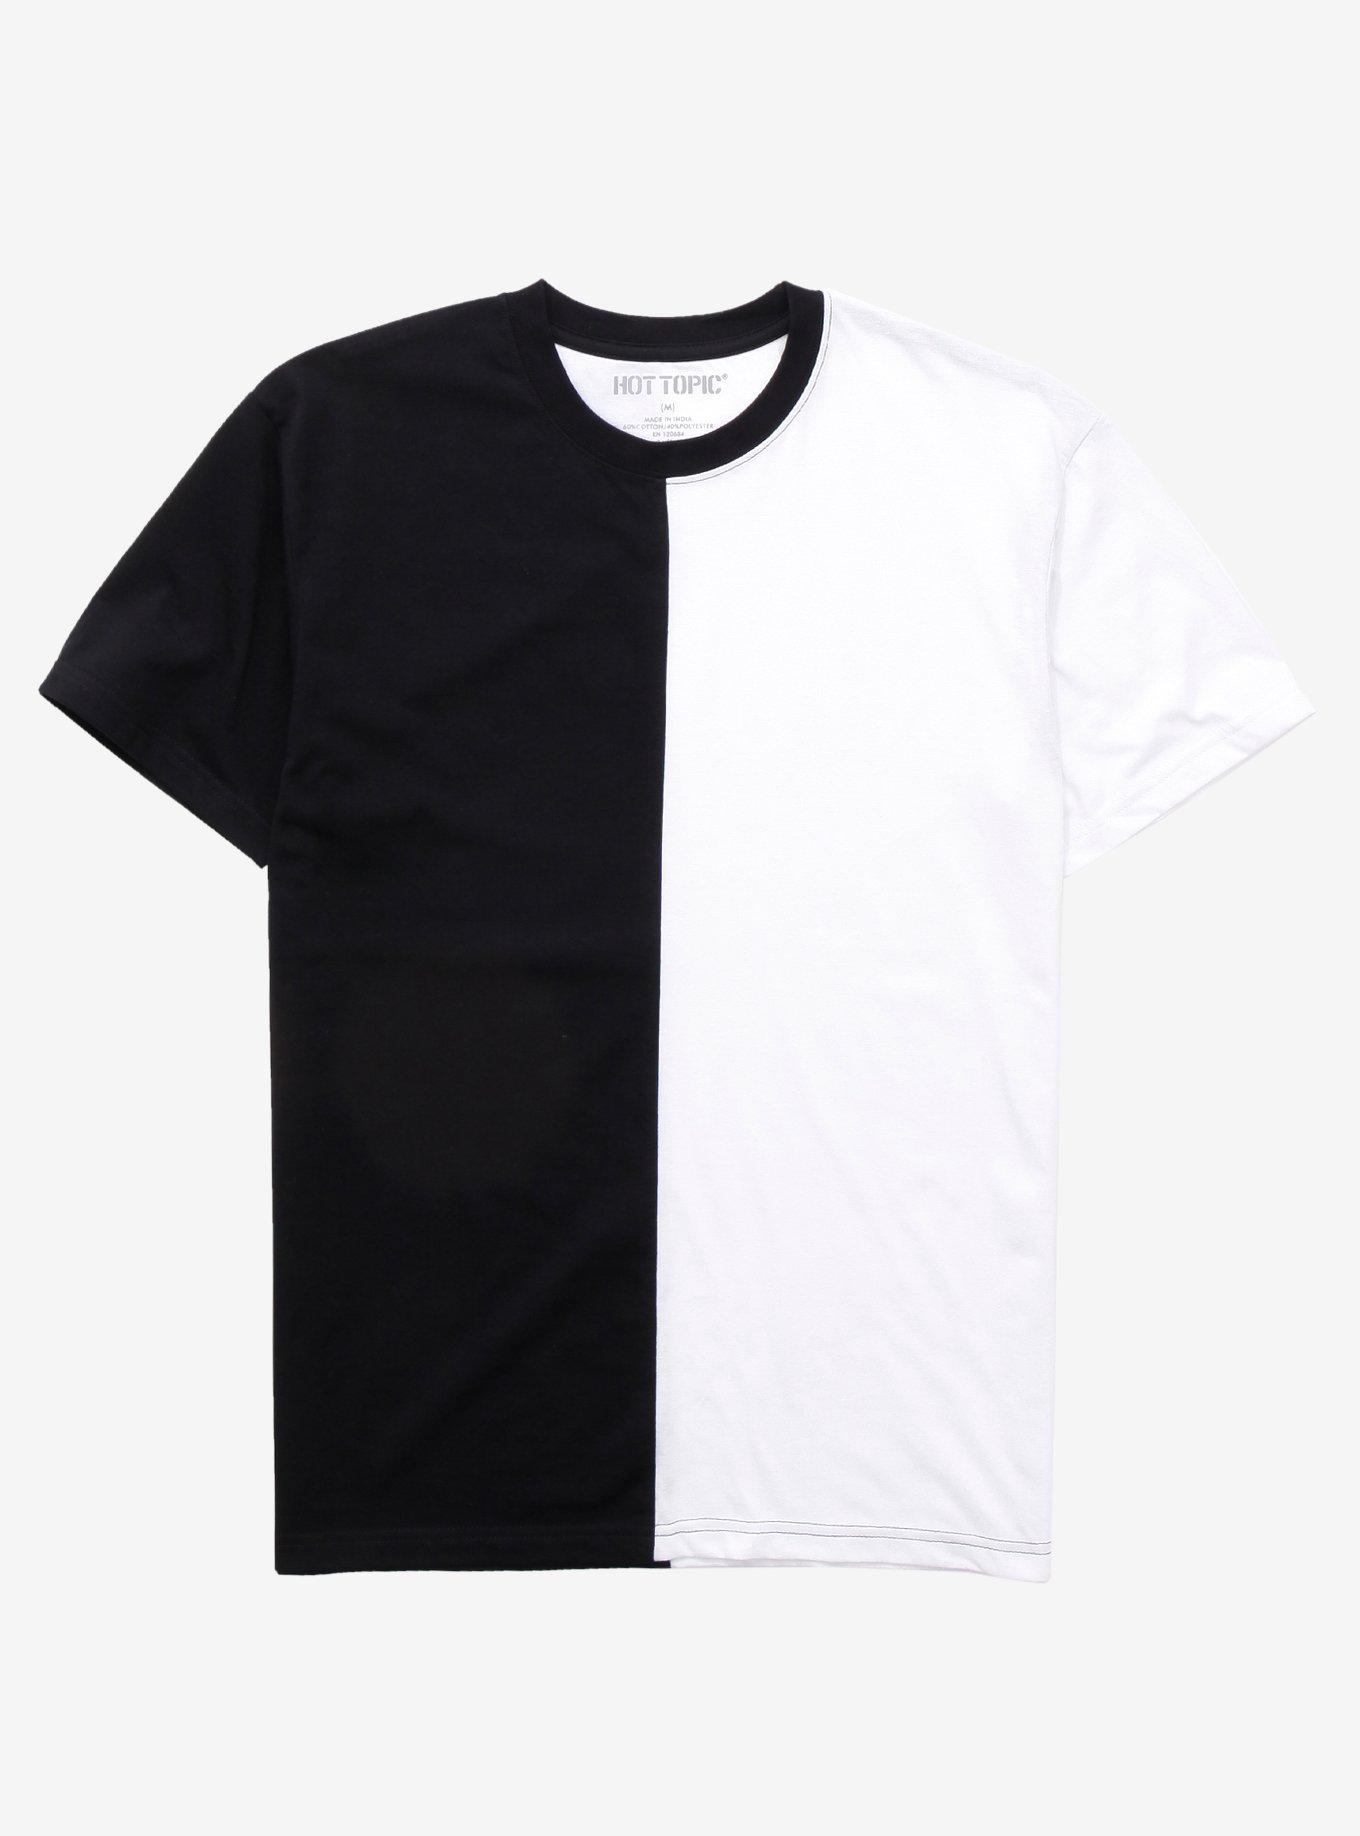 Black White Split T Shirt Hot Topic